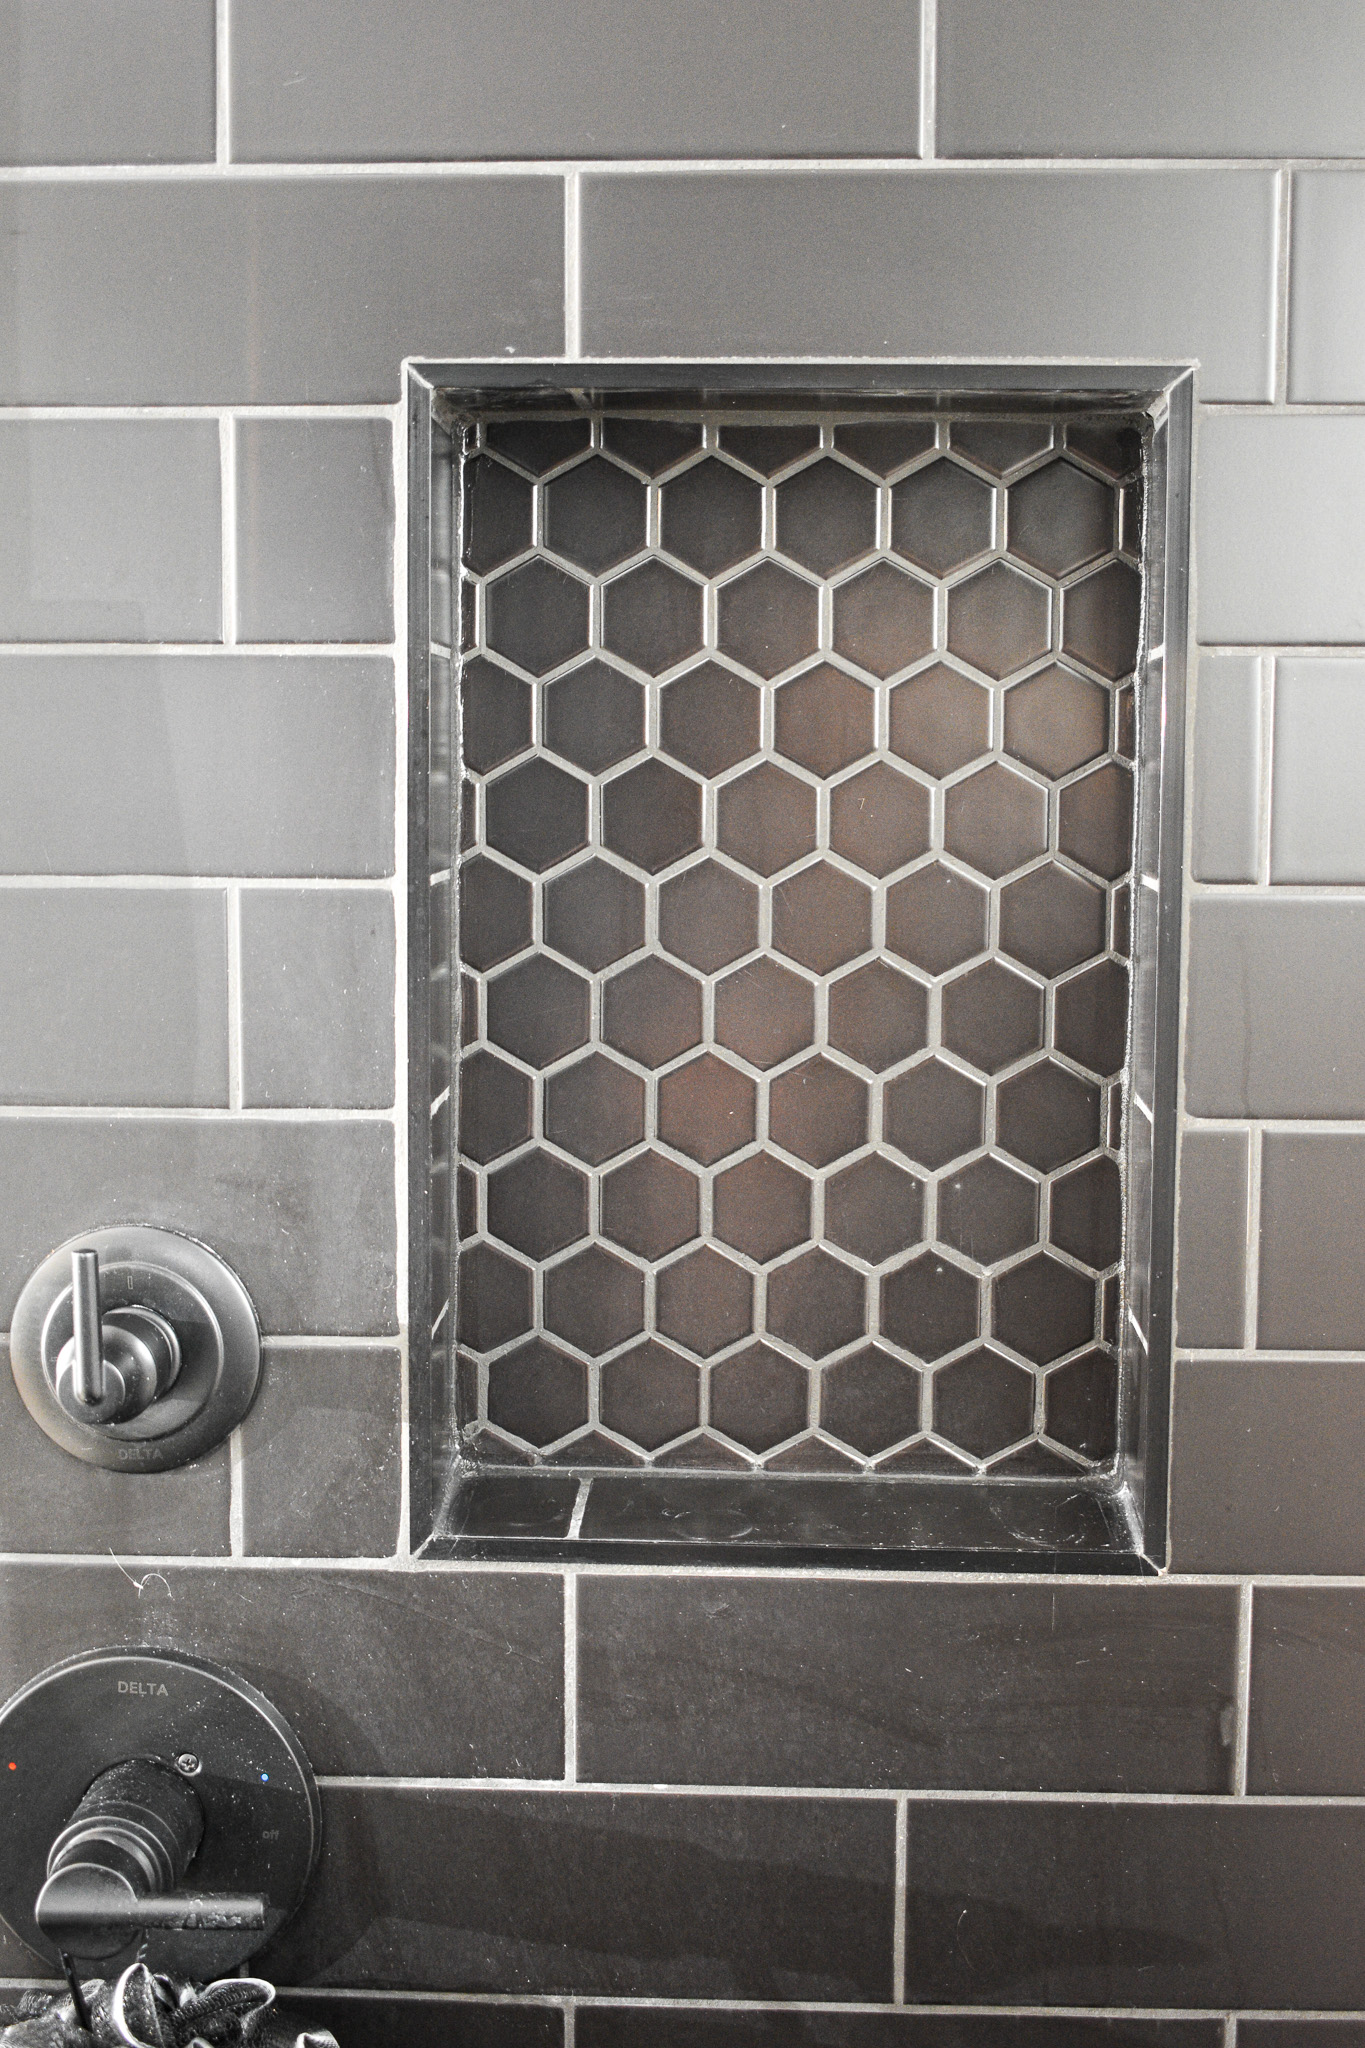 Contemporary Living - Master Bath - Double Shower - Black Tile close up shot